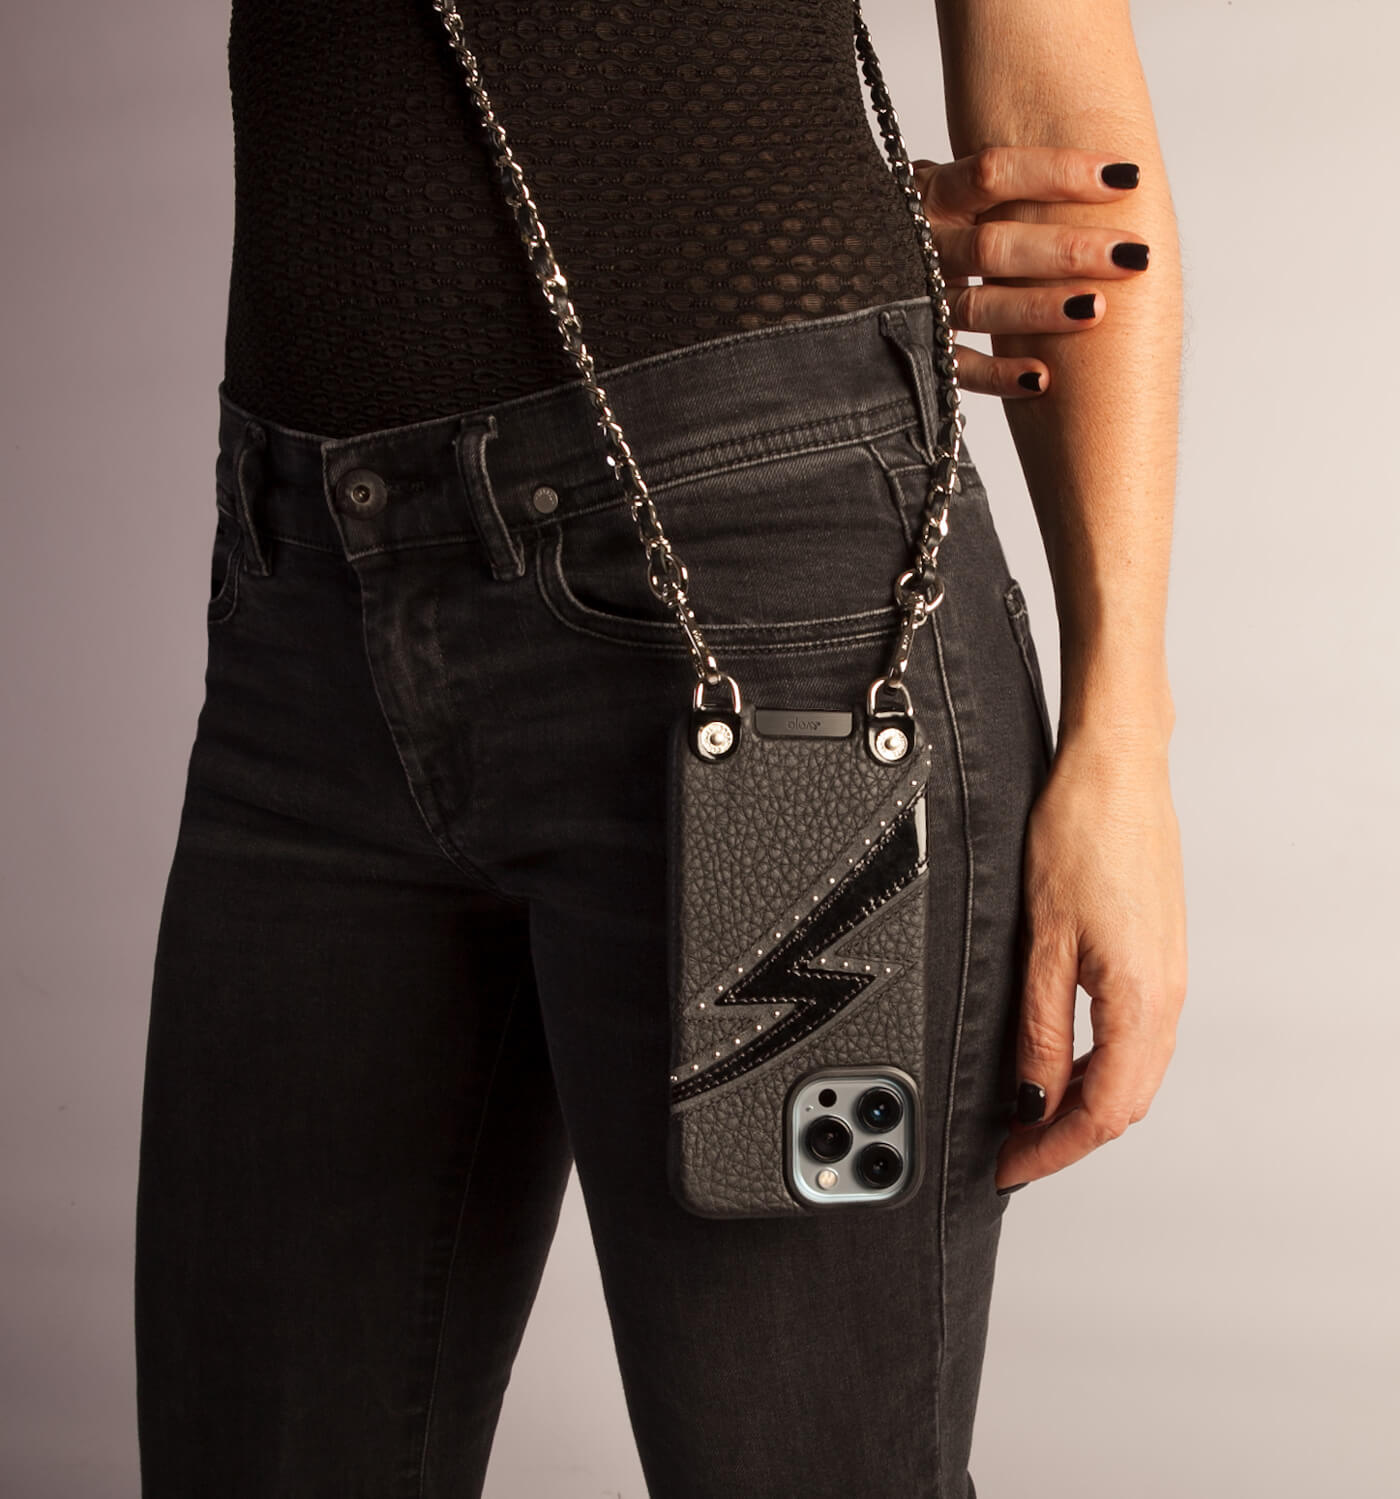 New signature Crossbody leather case for iPhone 14 Pro Max - Vaja